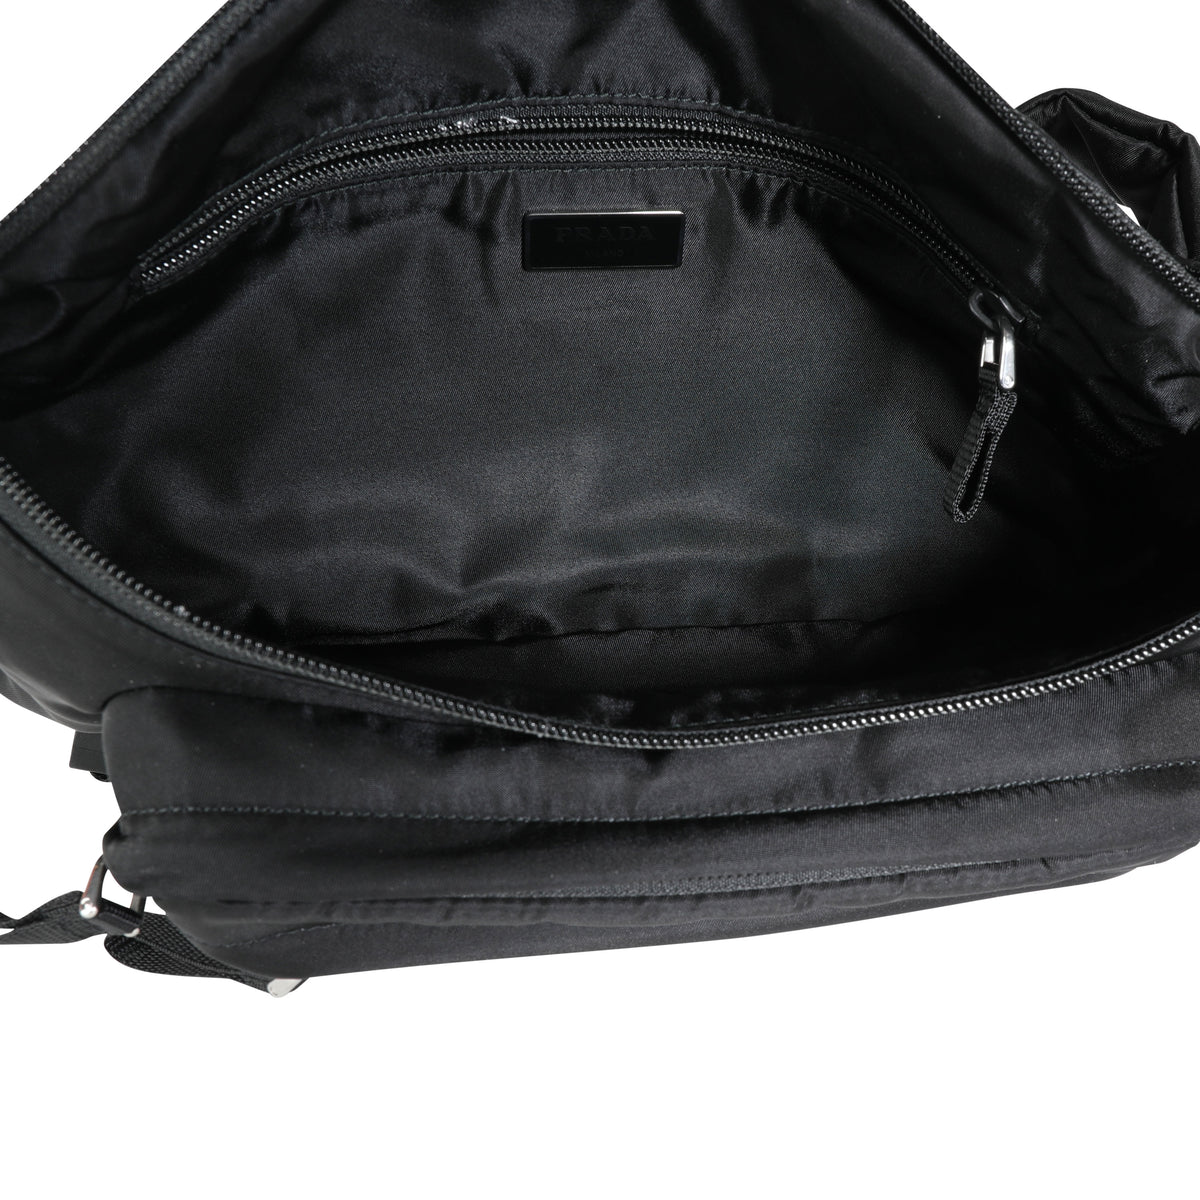 Prada Zip Waist Bag Tessuto Medium - ShopStyle